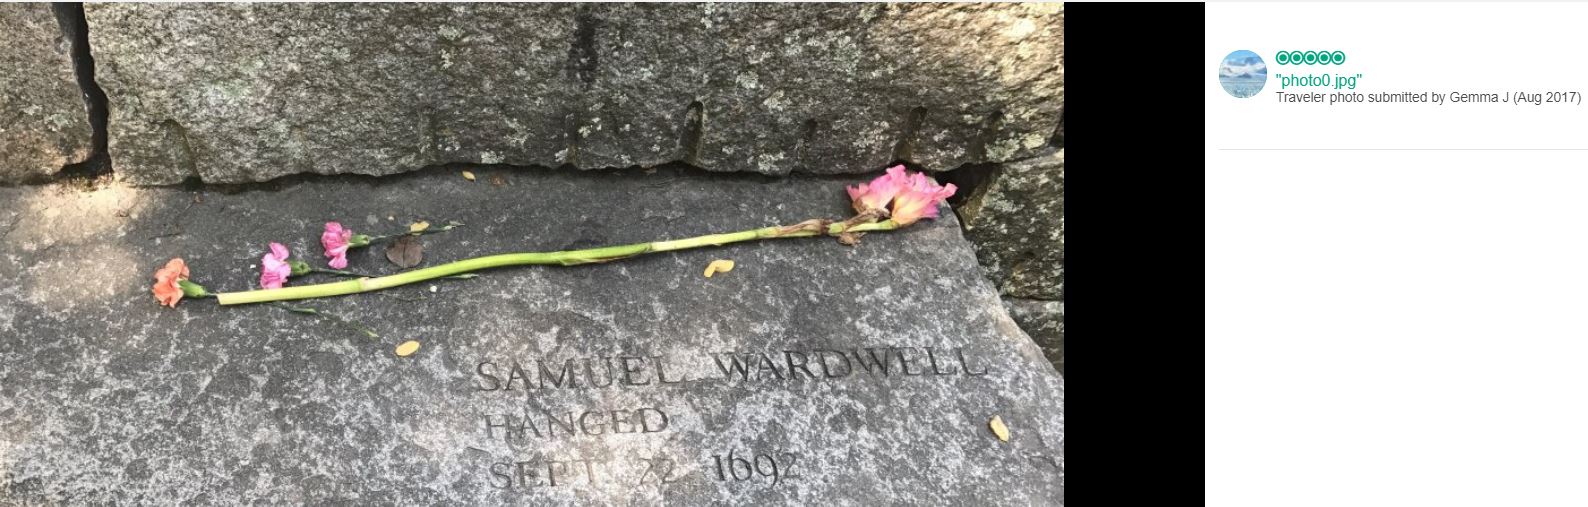 wardwell samuel memorial